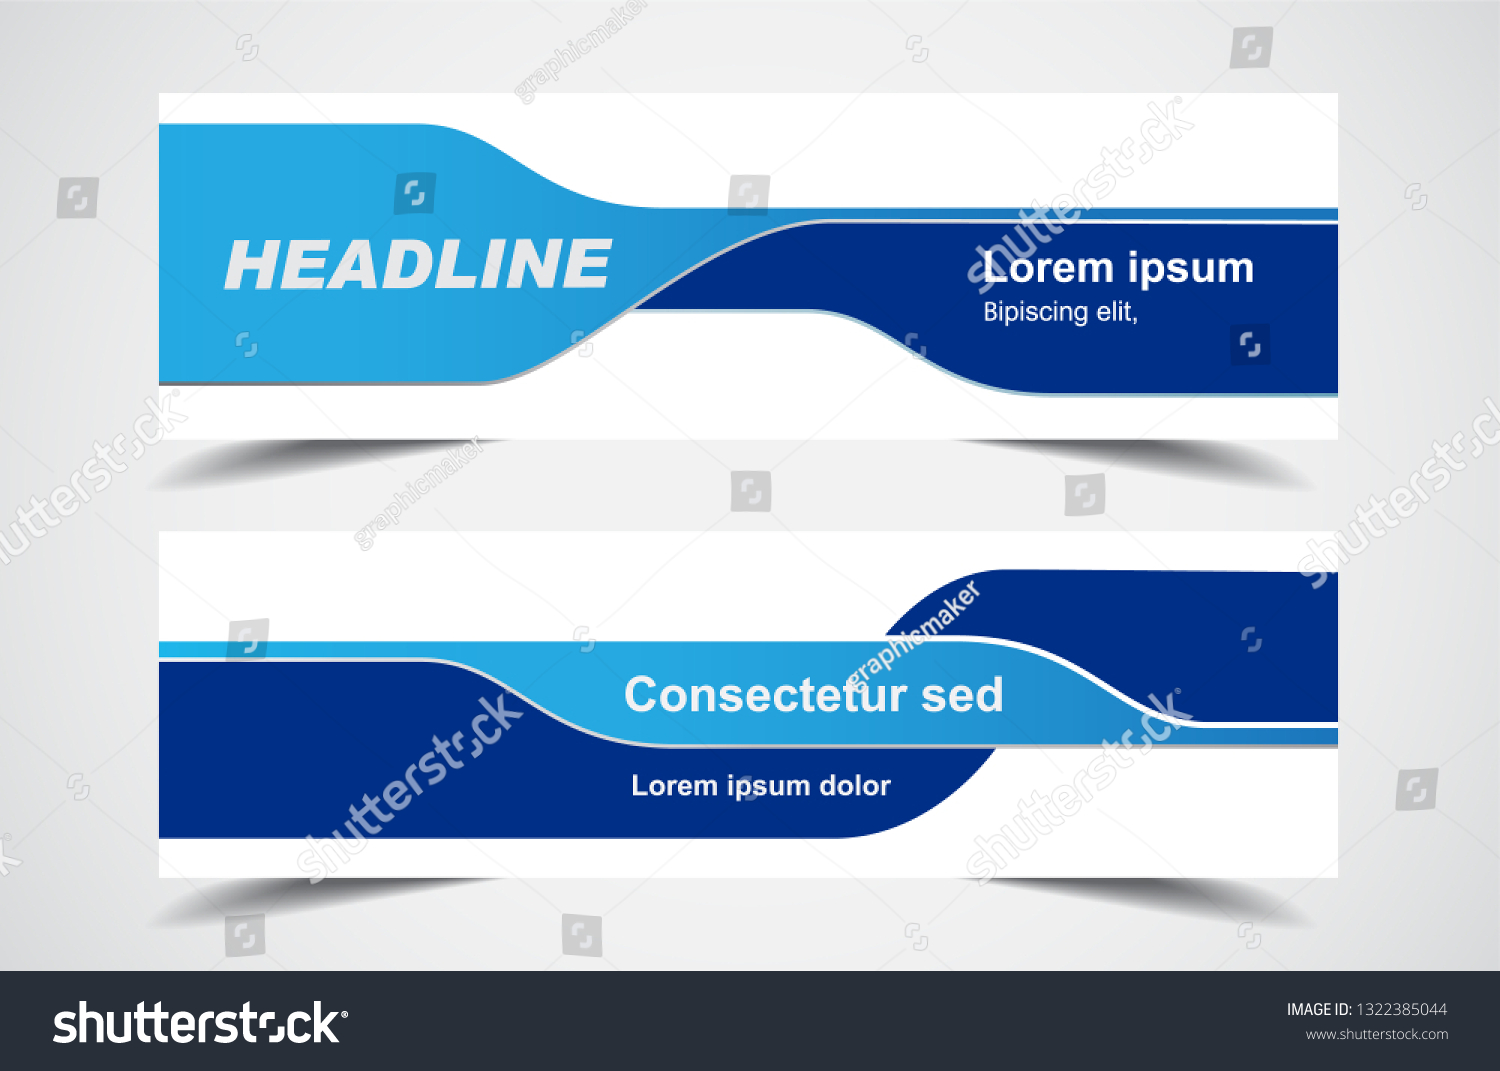 Set of modern design - Vector web banners design background or header templates, blue color, horizontal advertising business banner. #1322385044